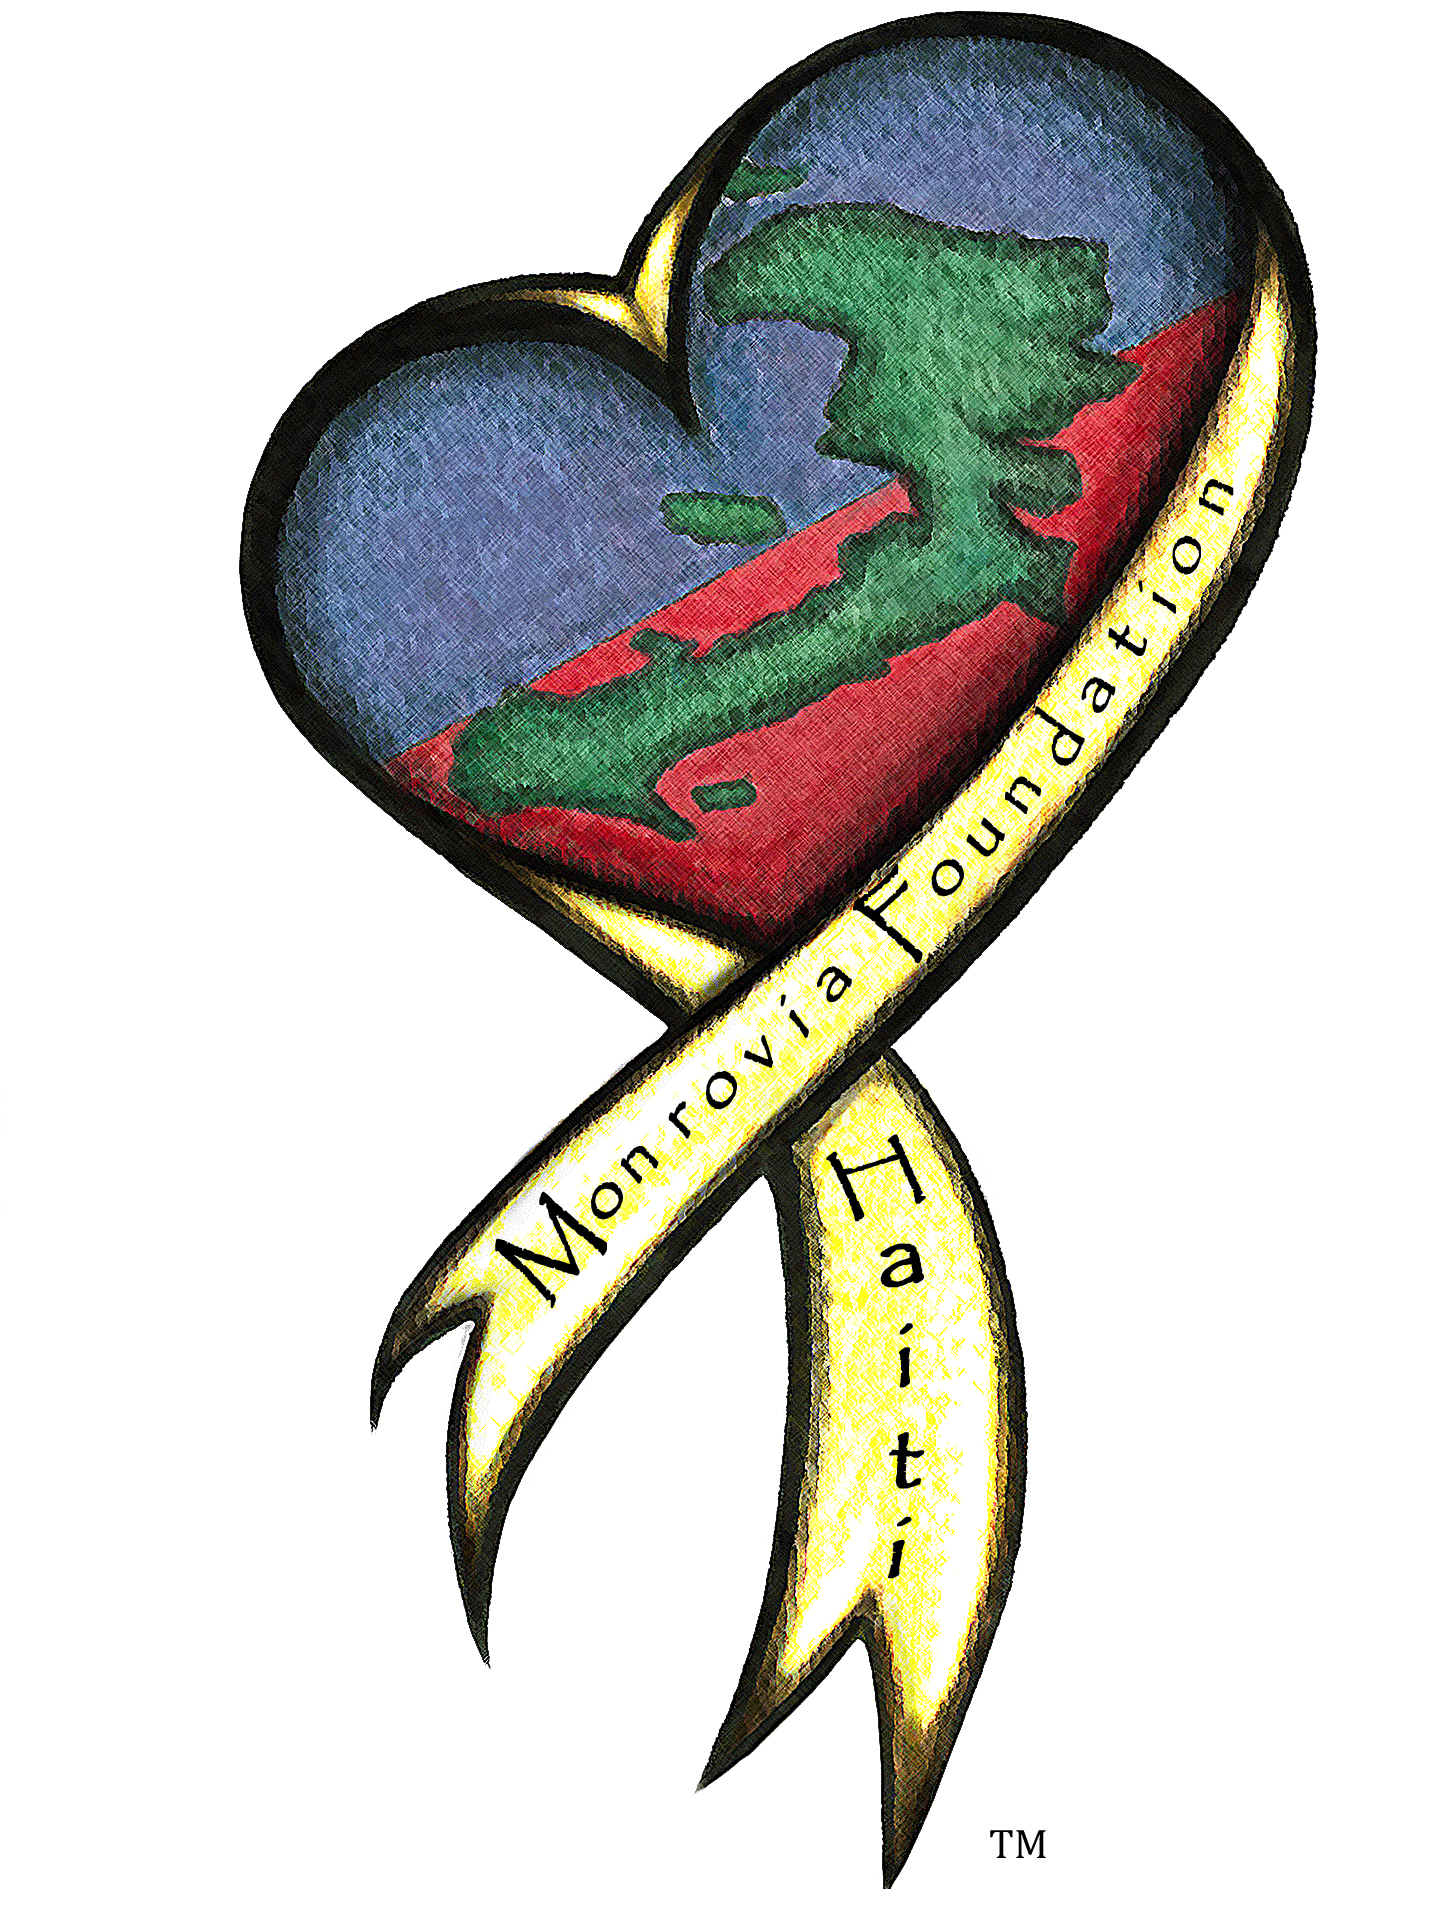 Monrovia Foundation for Haiti